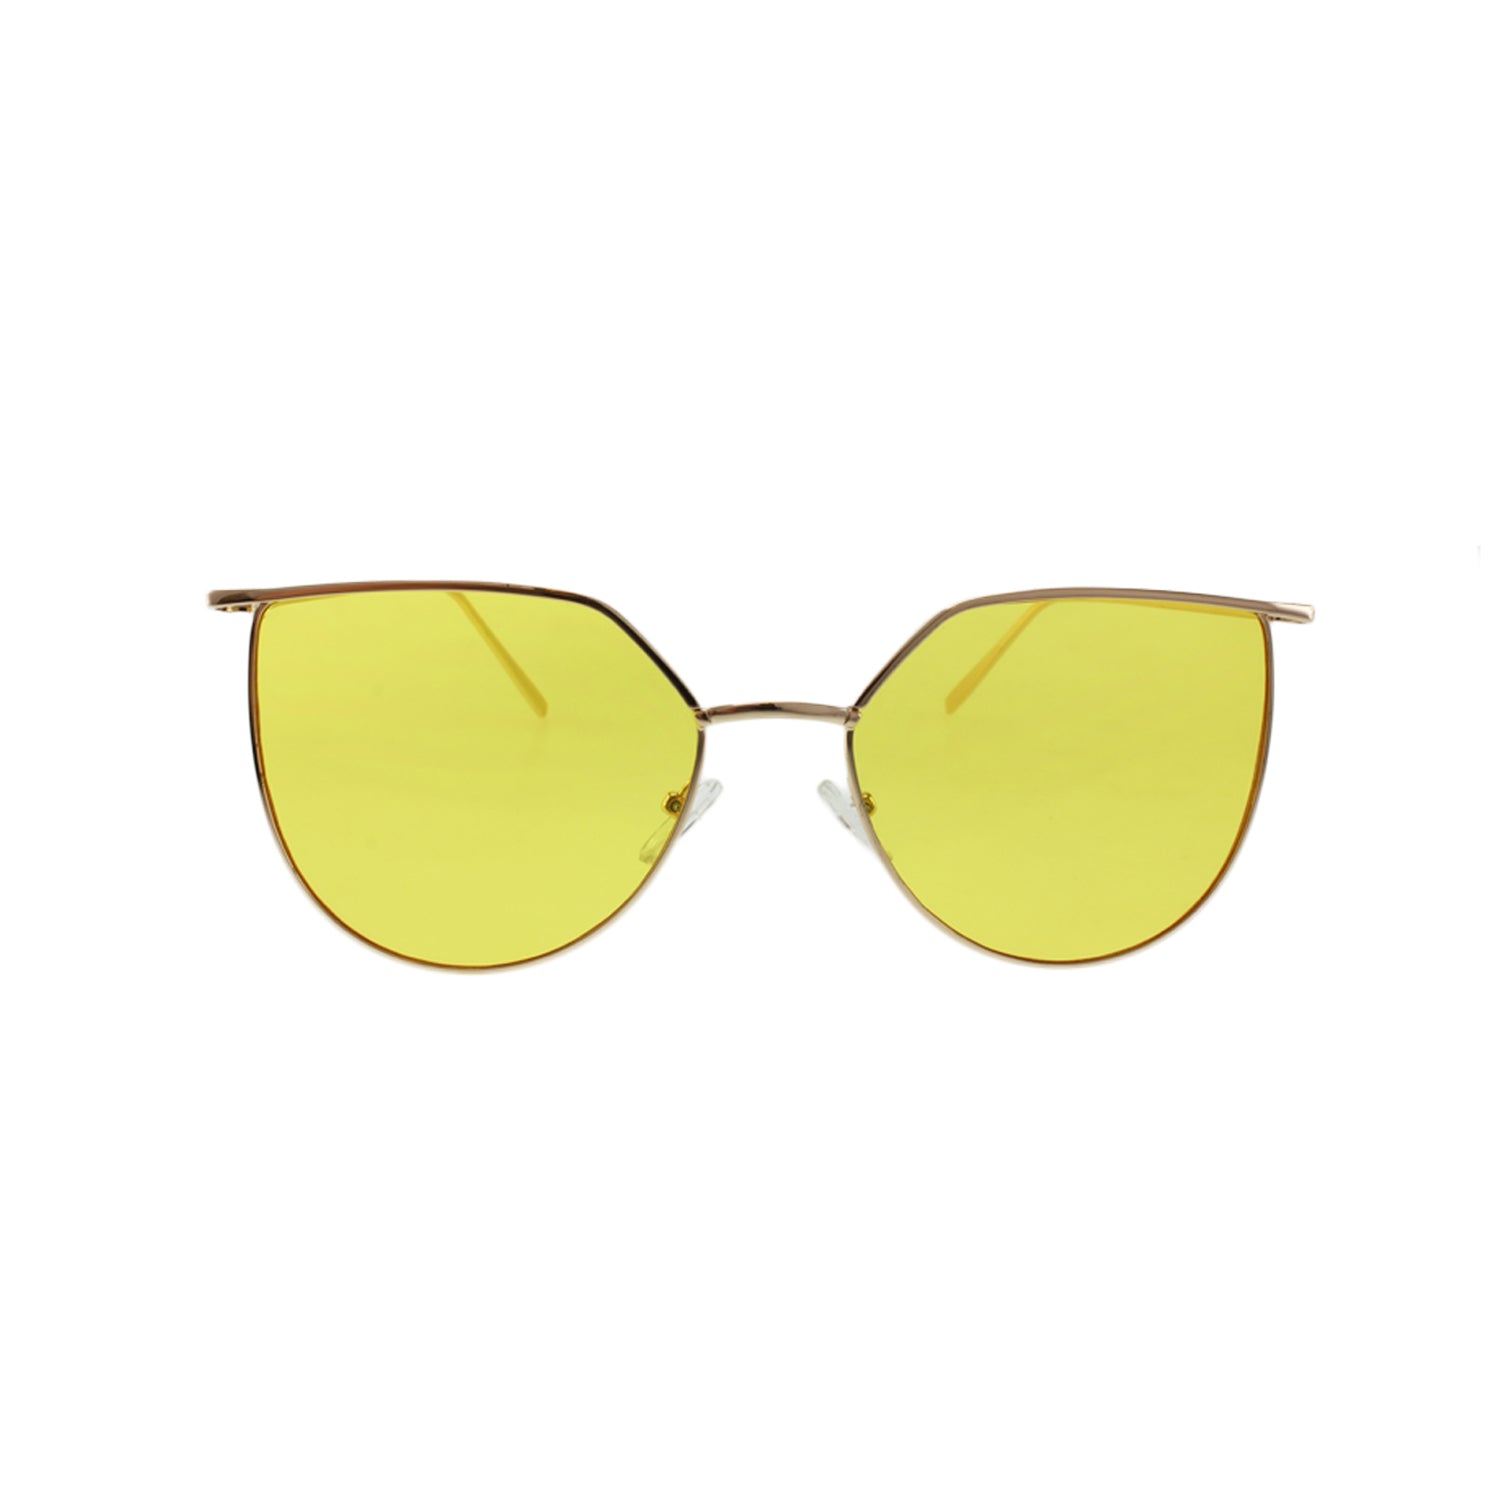 Jase New York Alton Sunglasses in Yellow